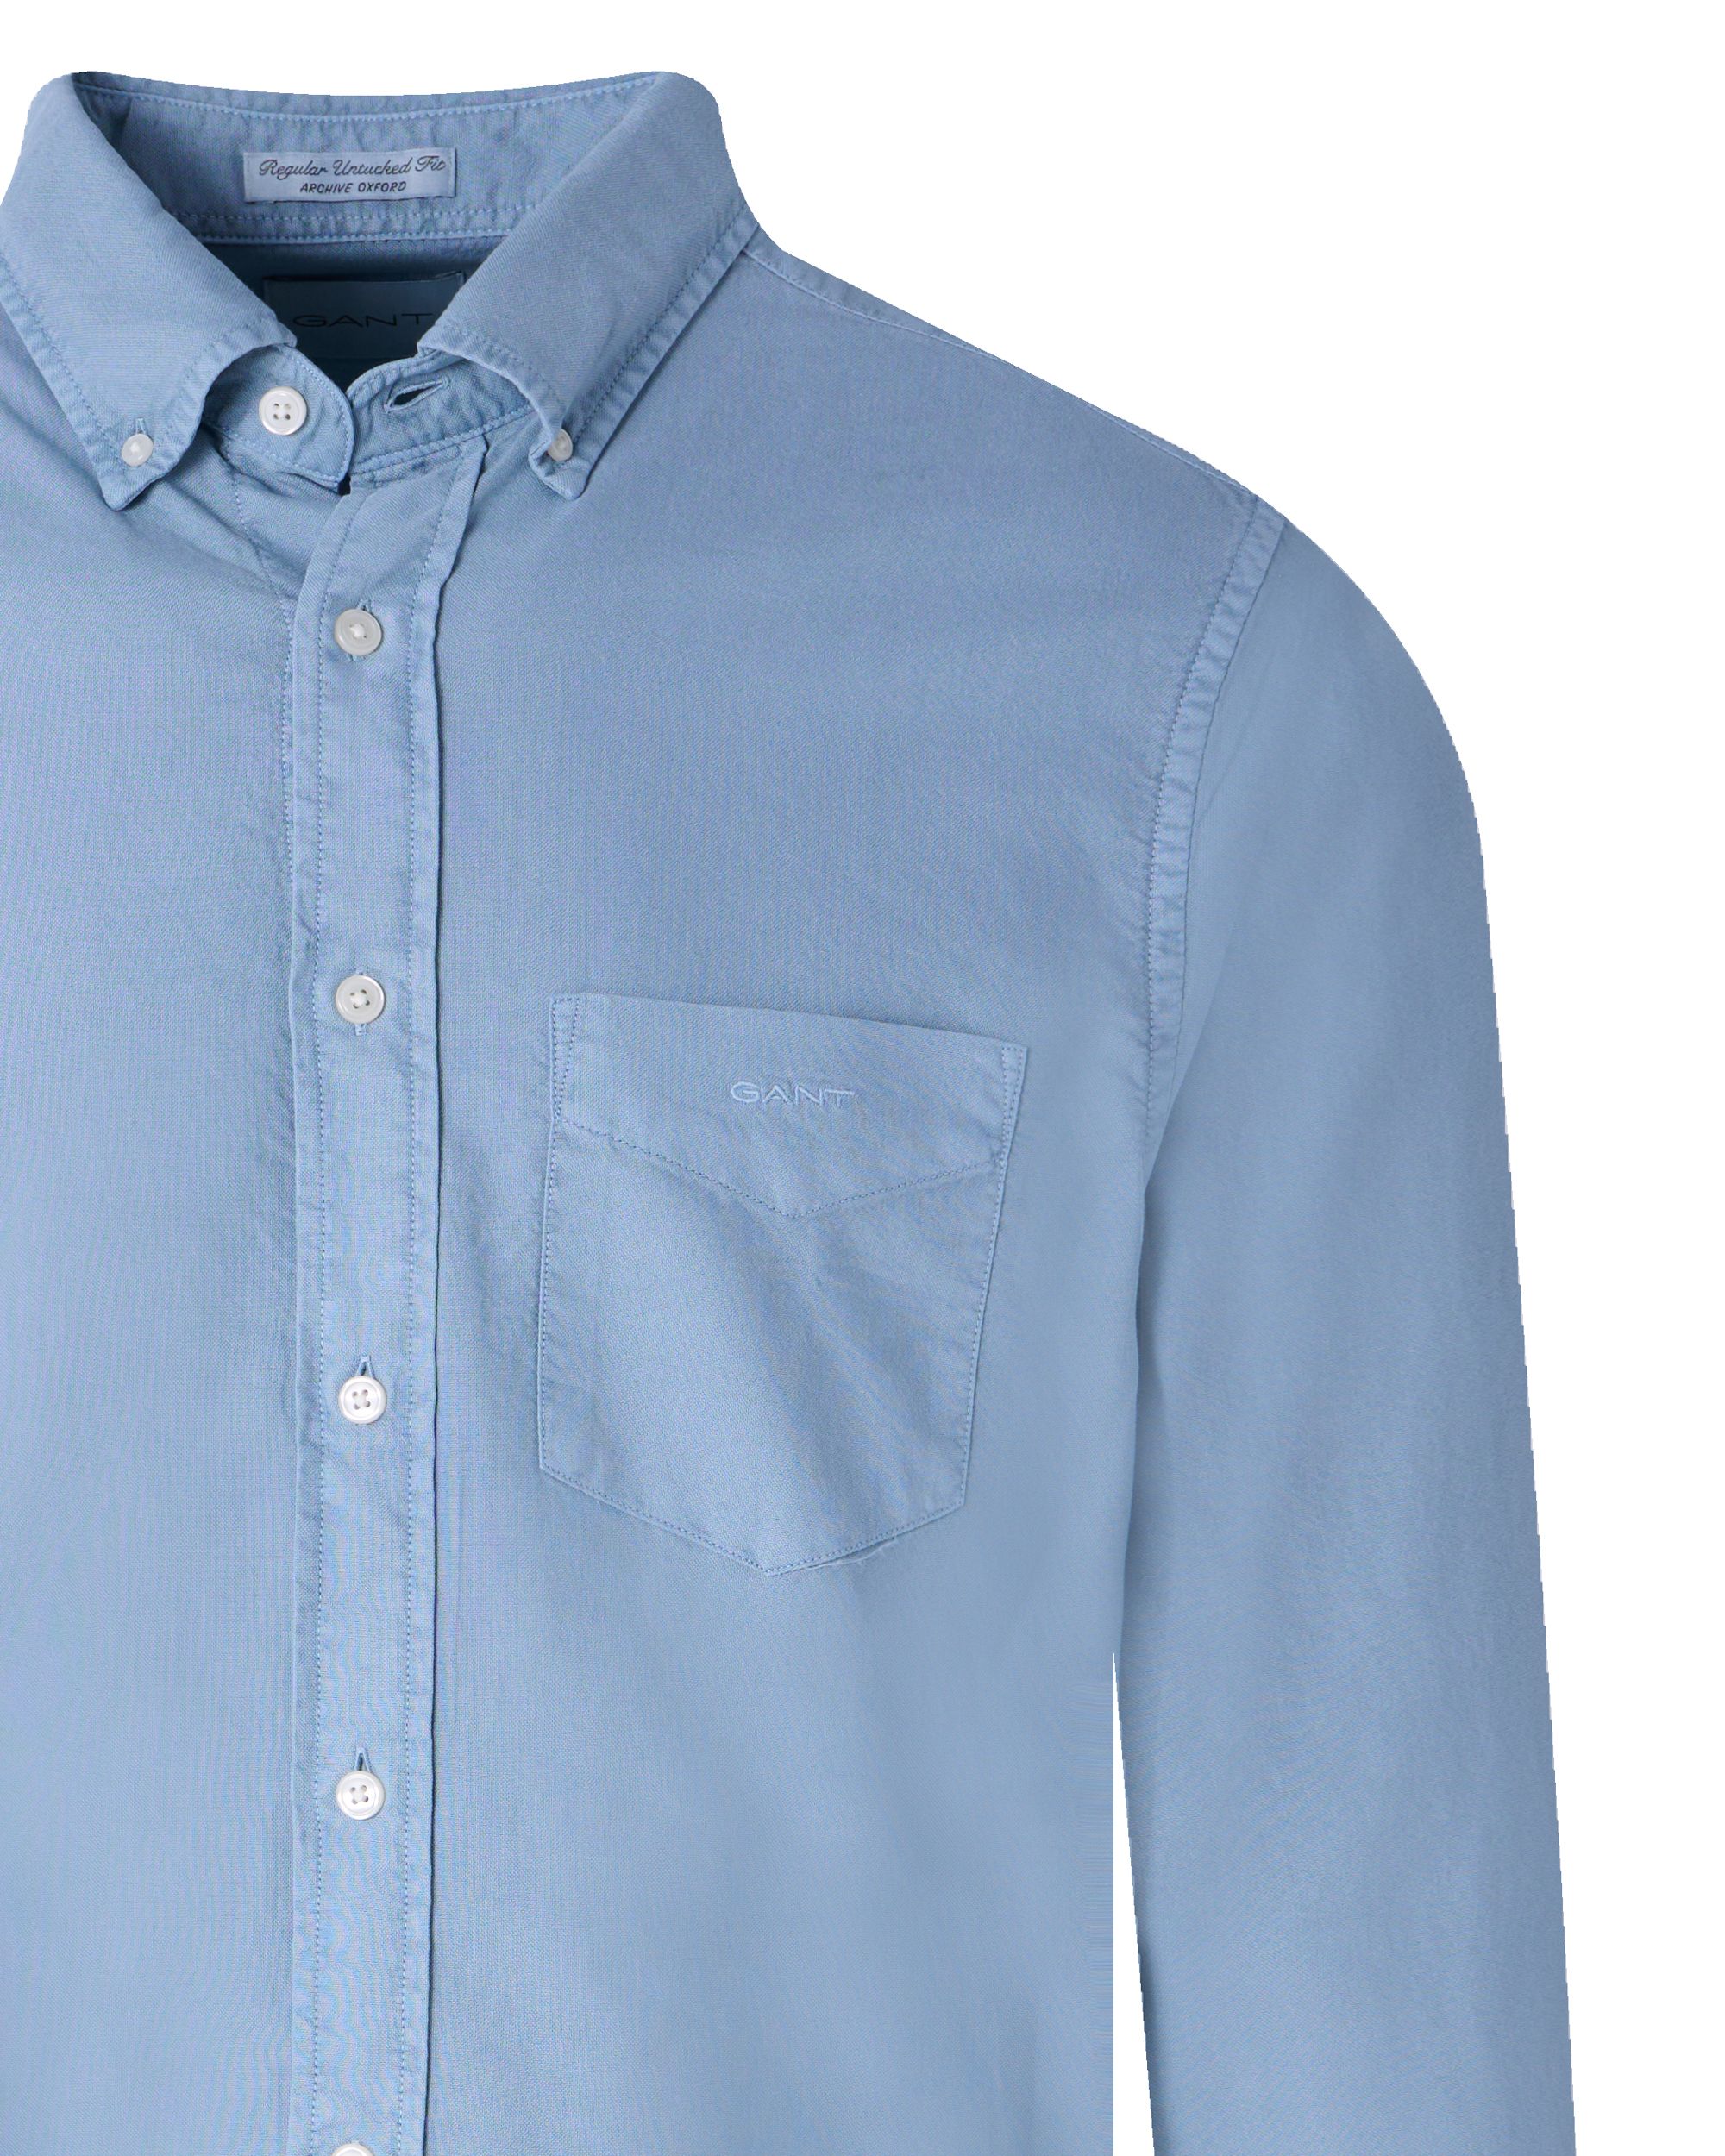 GANT Casual Overhemd LM Blauw 091621-001-L